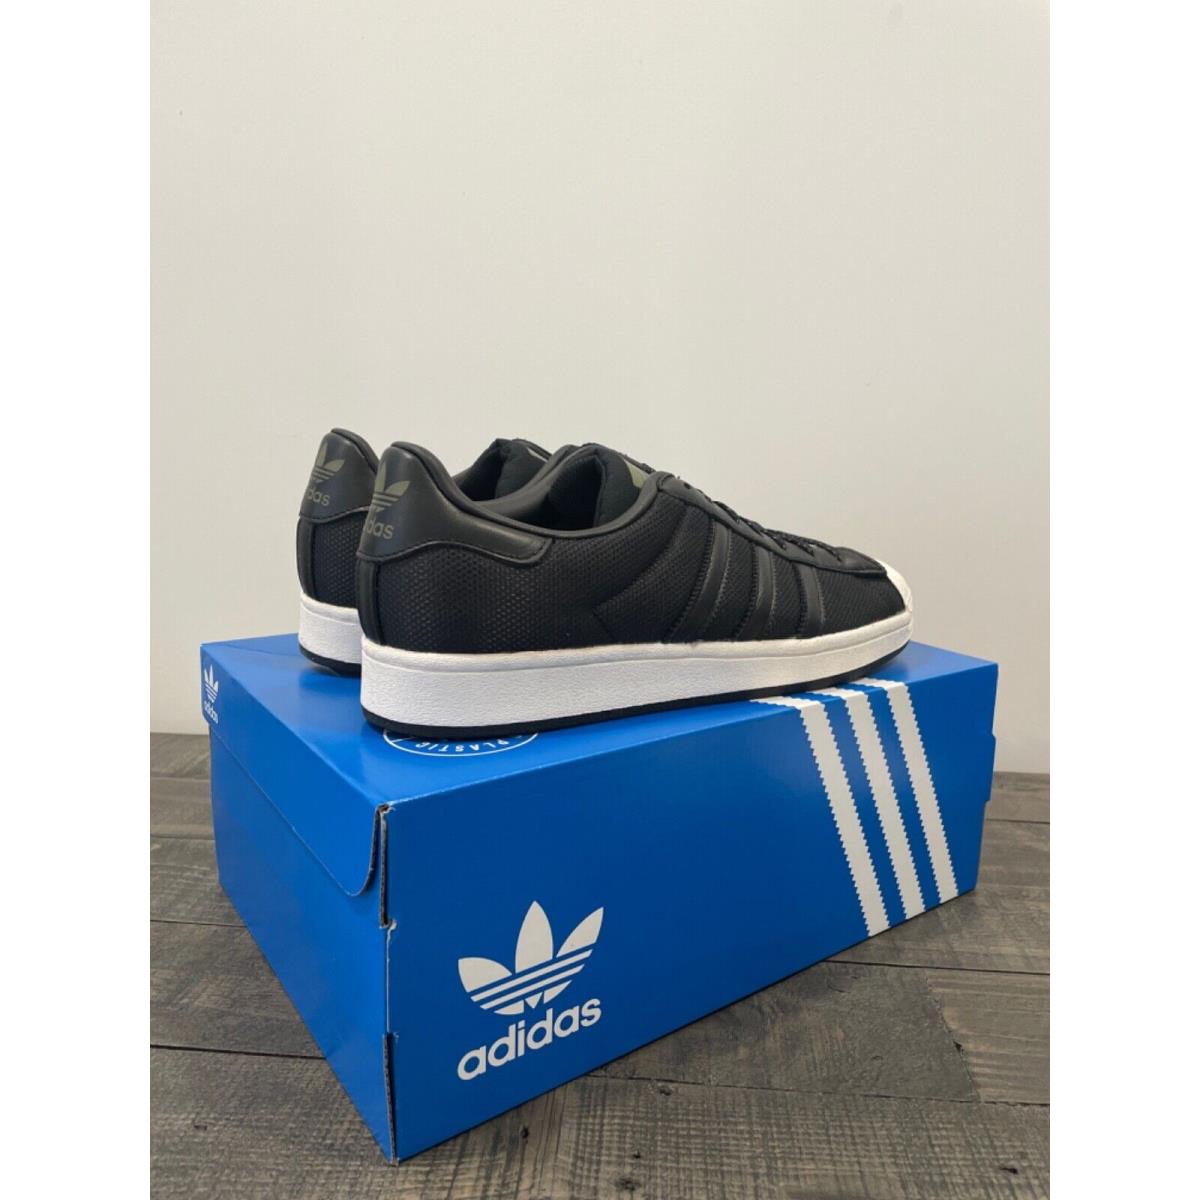 Adidas shoes Superstar - Black White 12